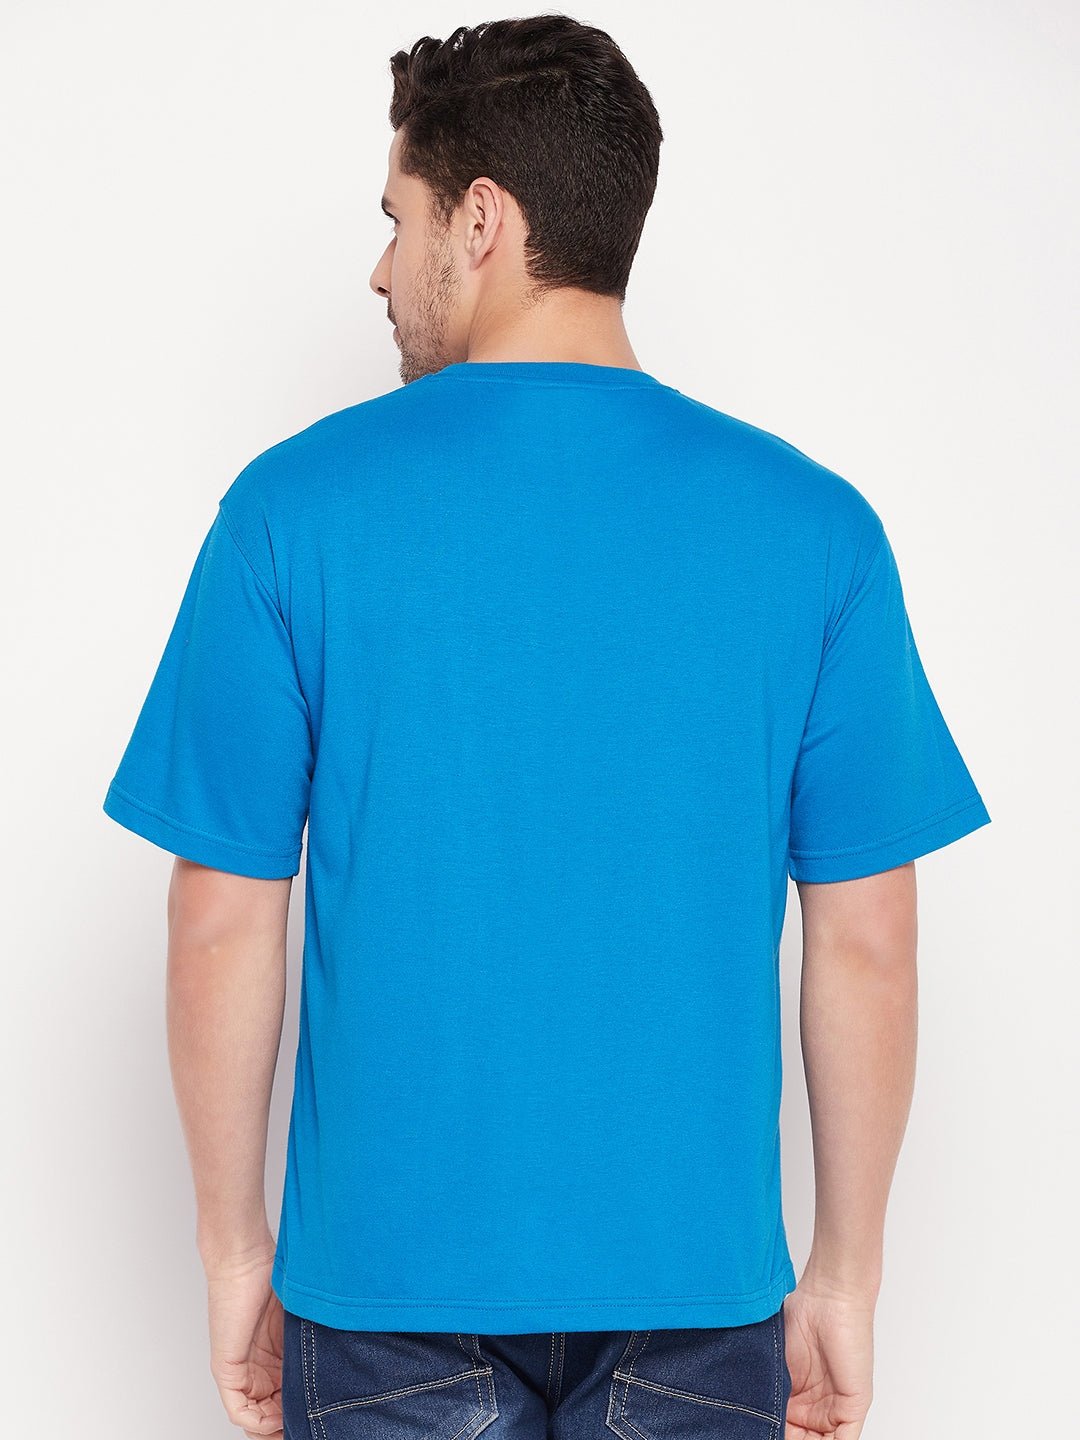 Teal Blue Round Neck T-shirt - clubyork